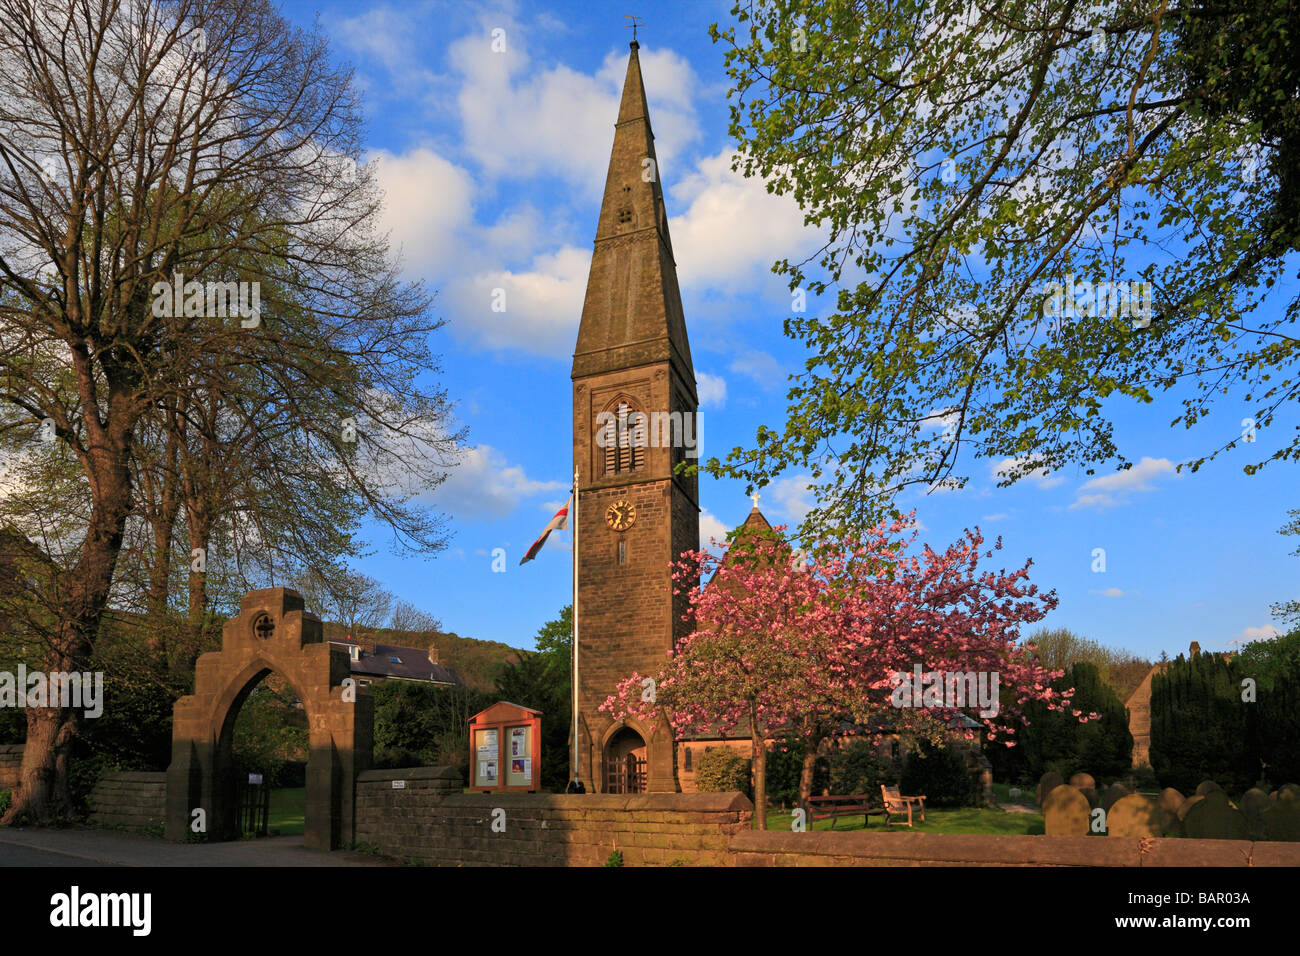 St John the Baptist church, Bamford, Derbyshire, Peak District National Park, England, UK. Stock Photo